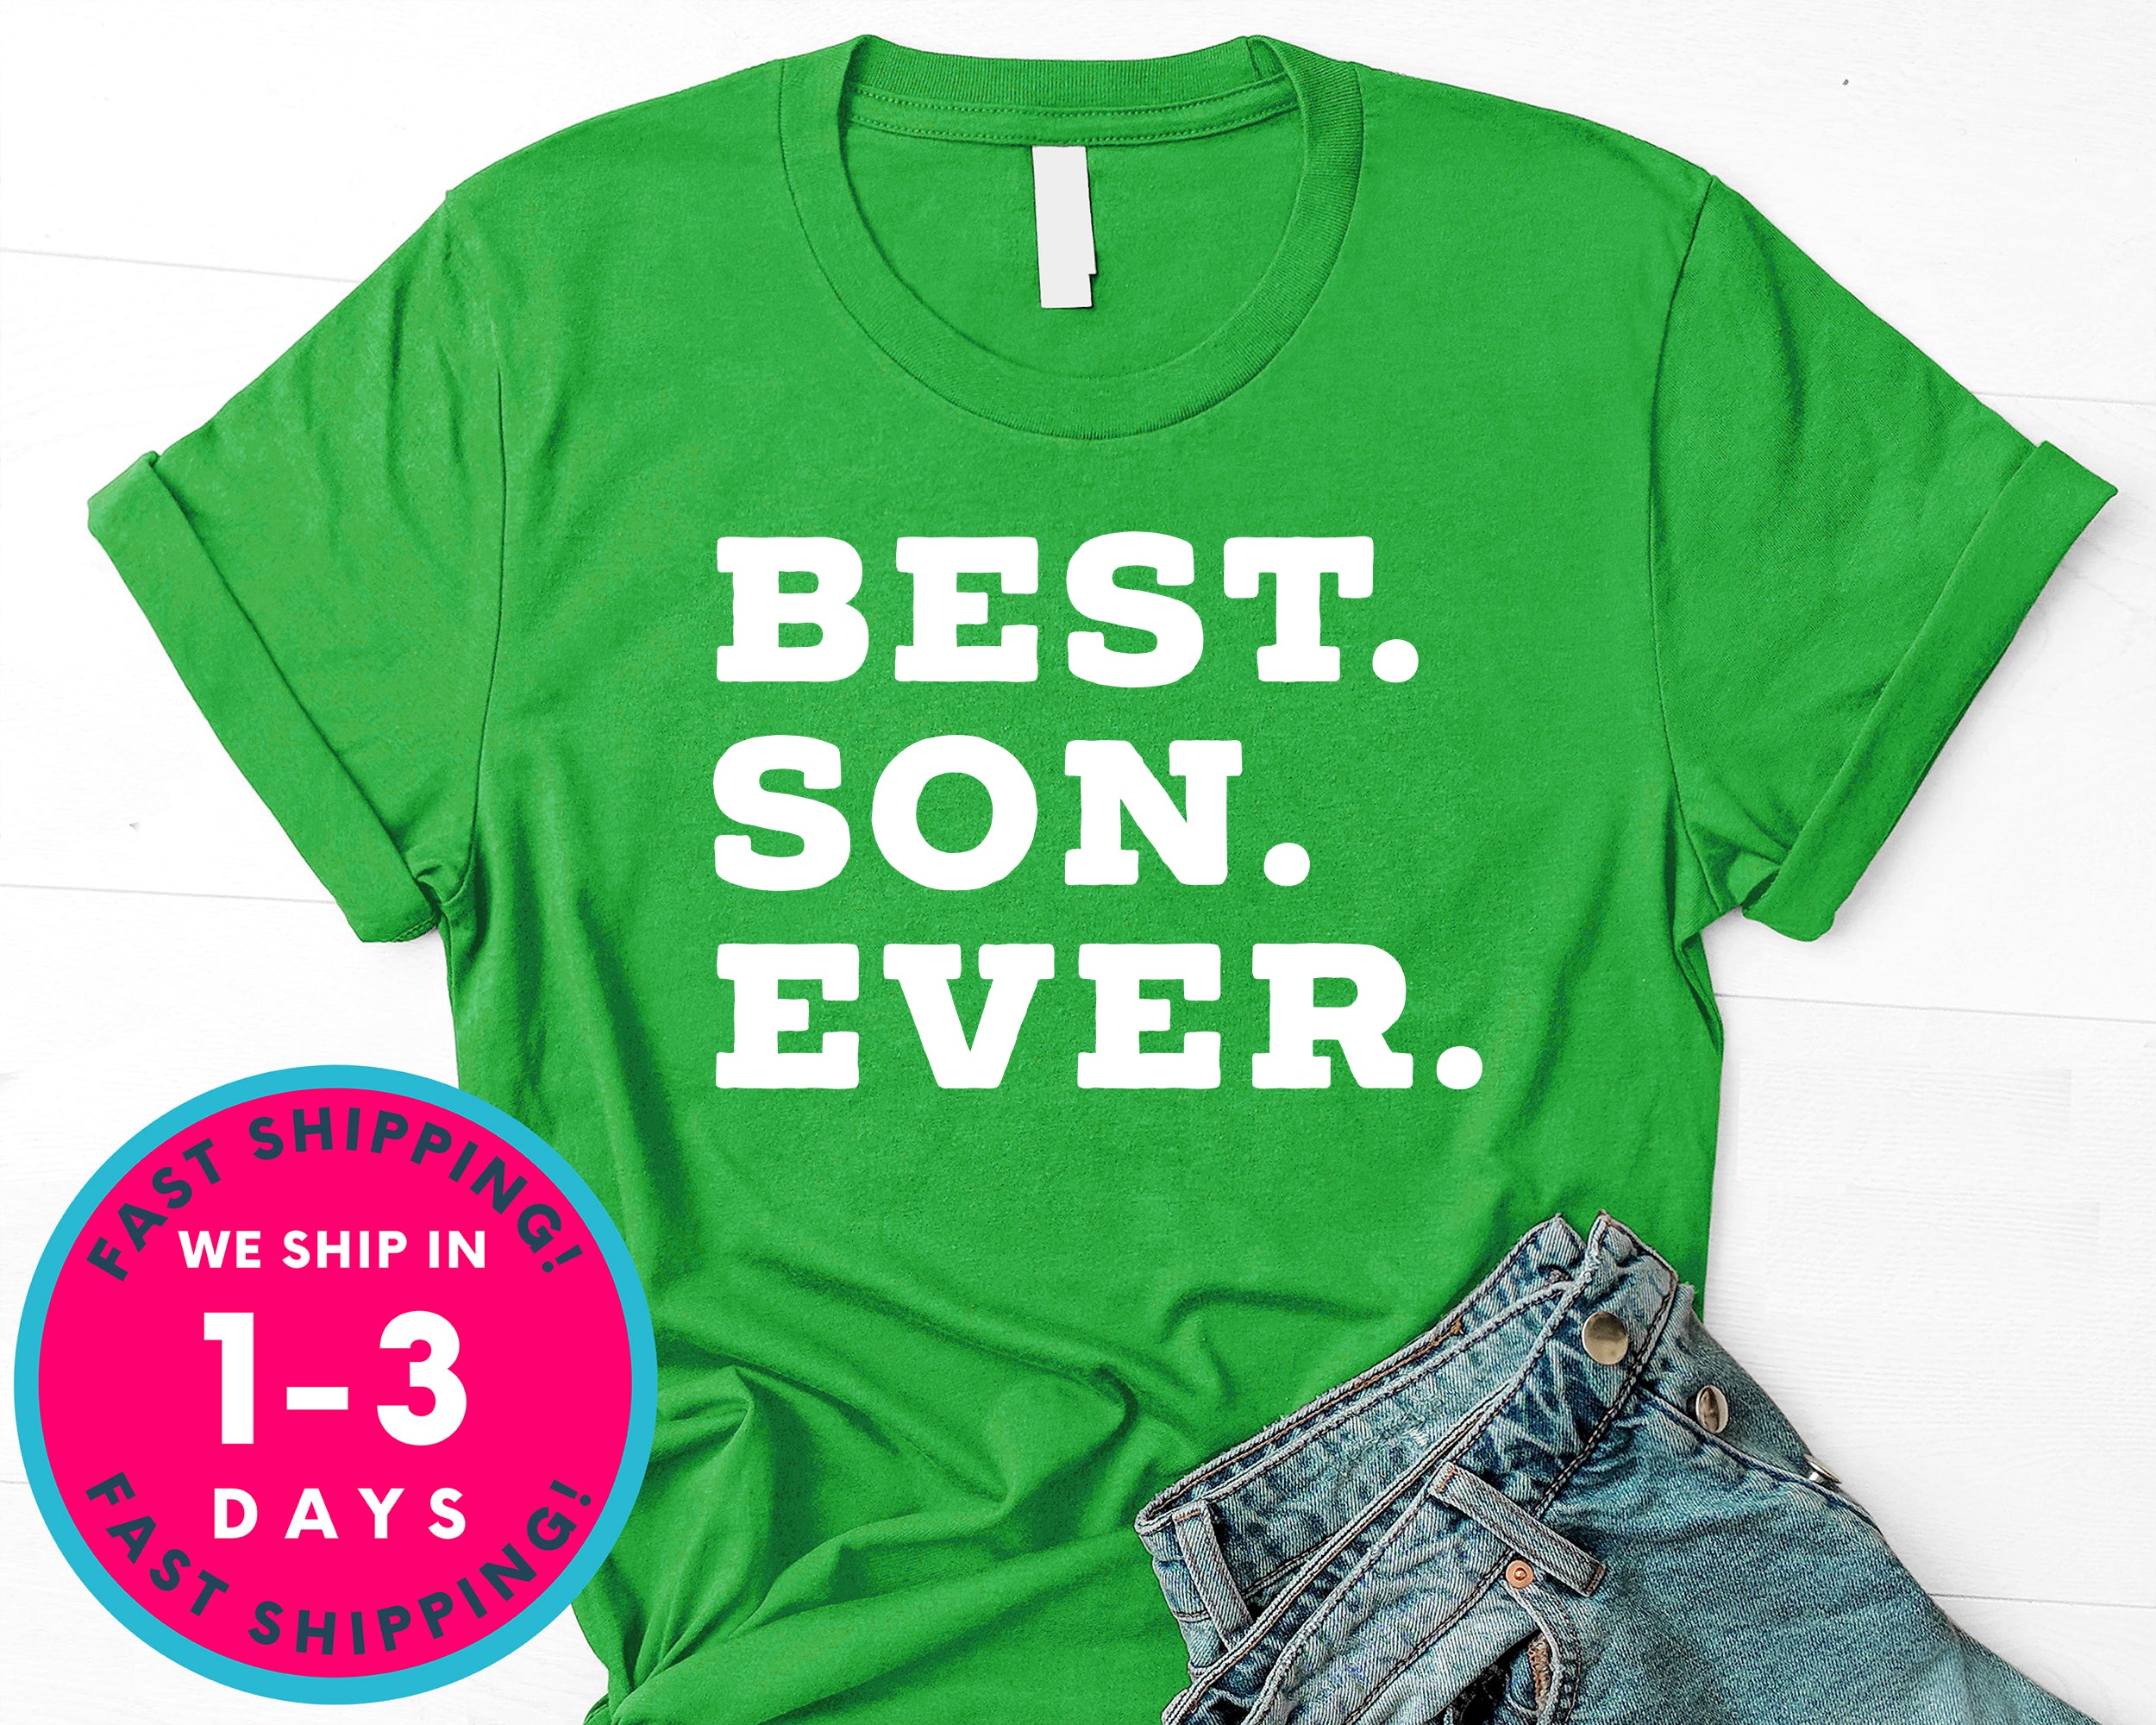 Best Son Ever T-Shirt - Family Shirt